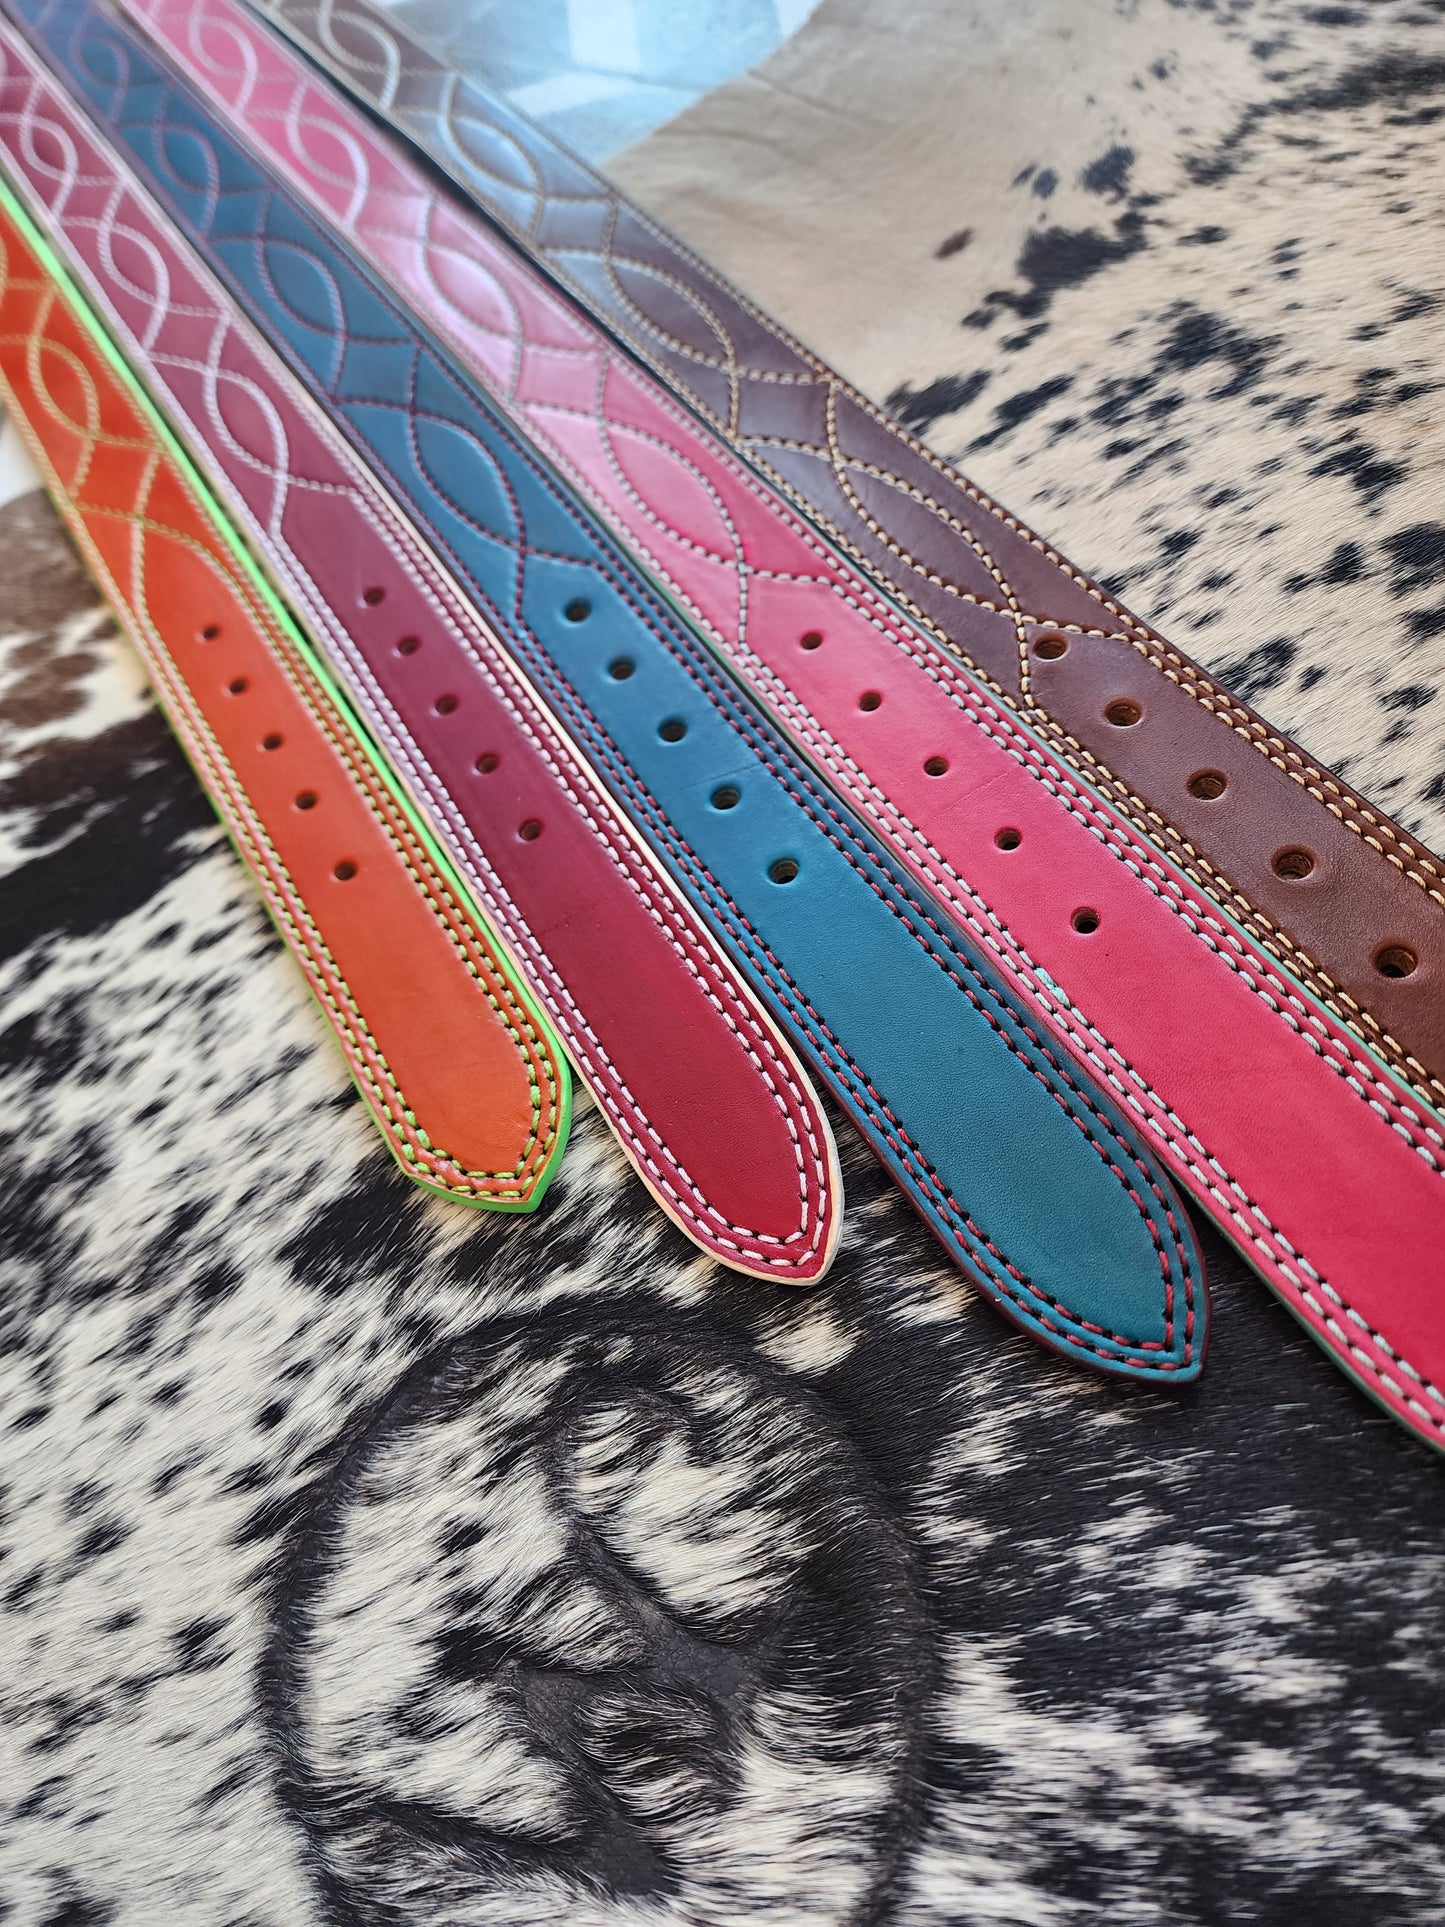 Stitched belts